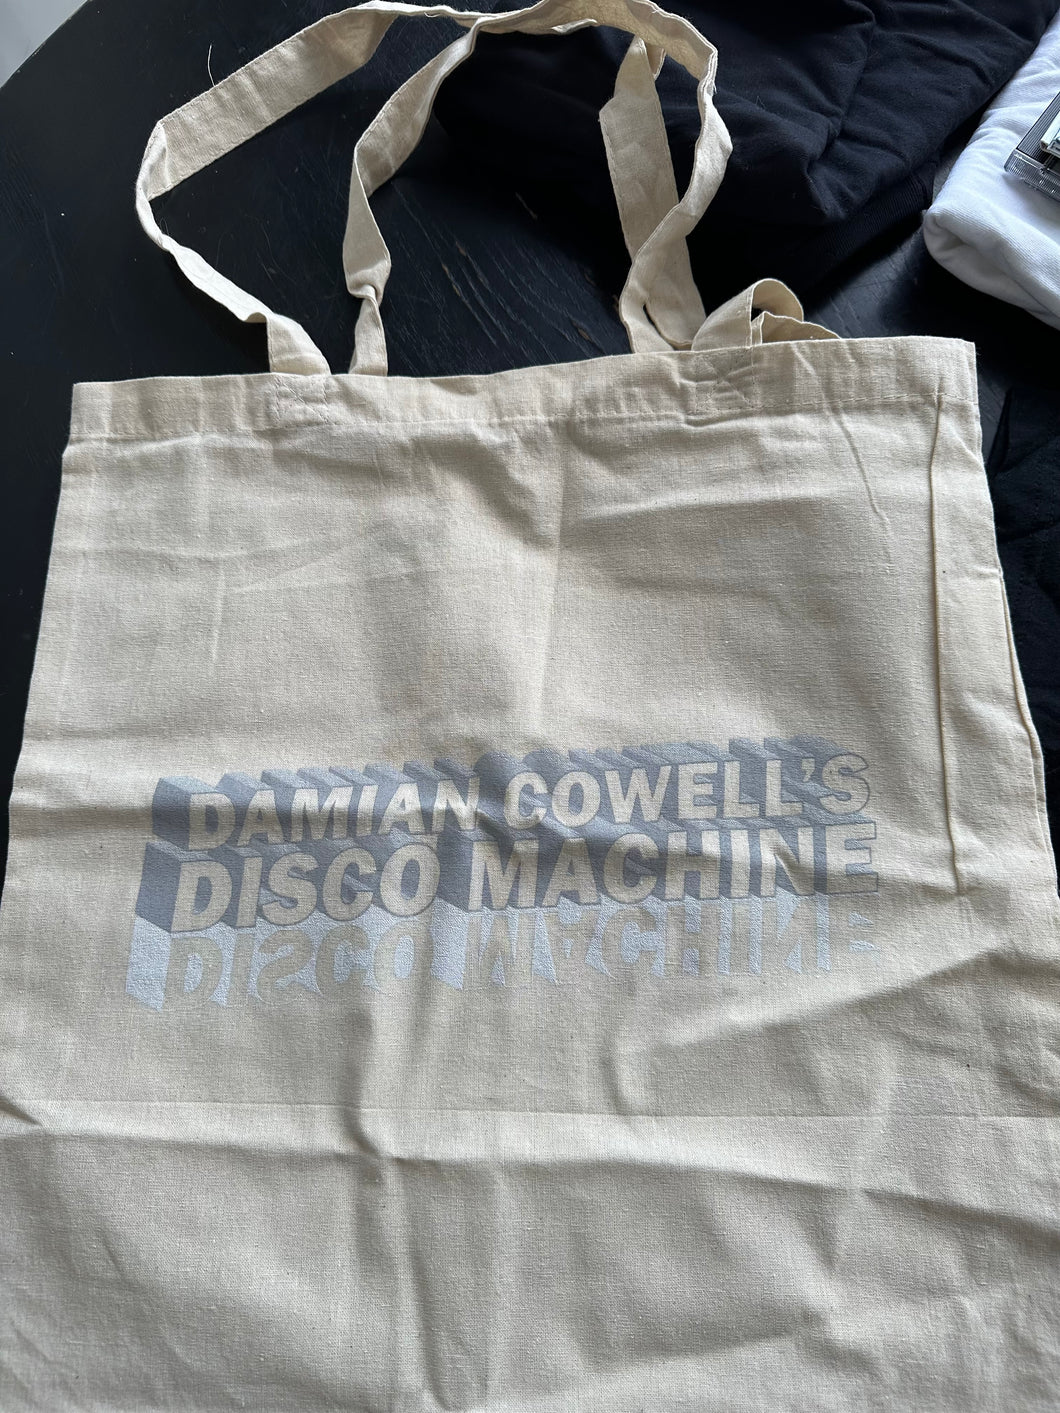 Damian Cowell's Disco Machine - Tote Bag